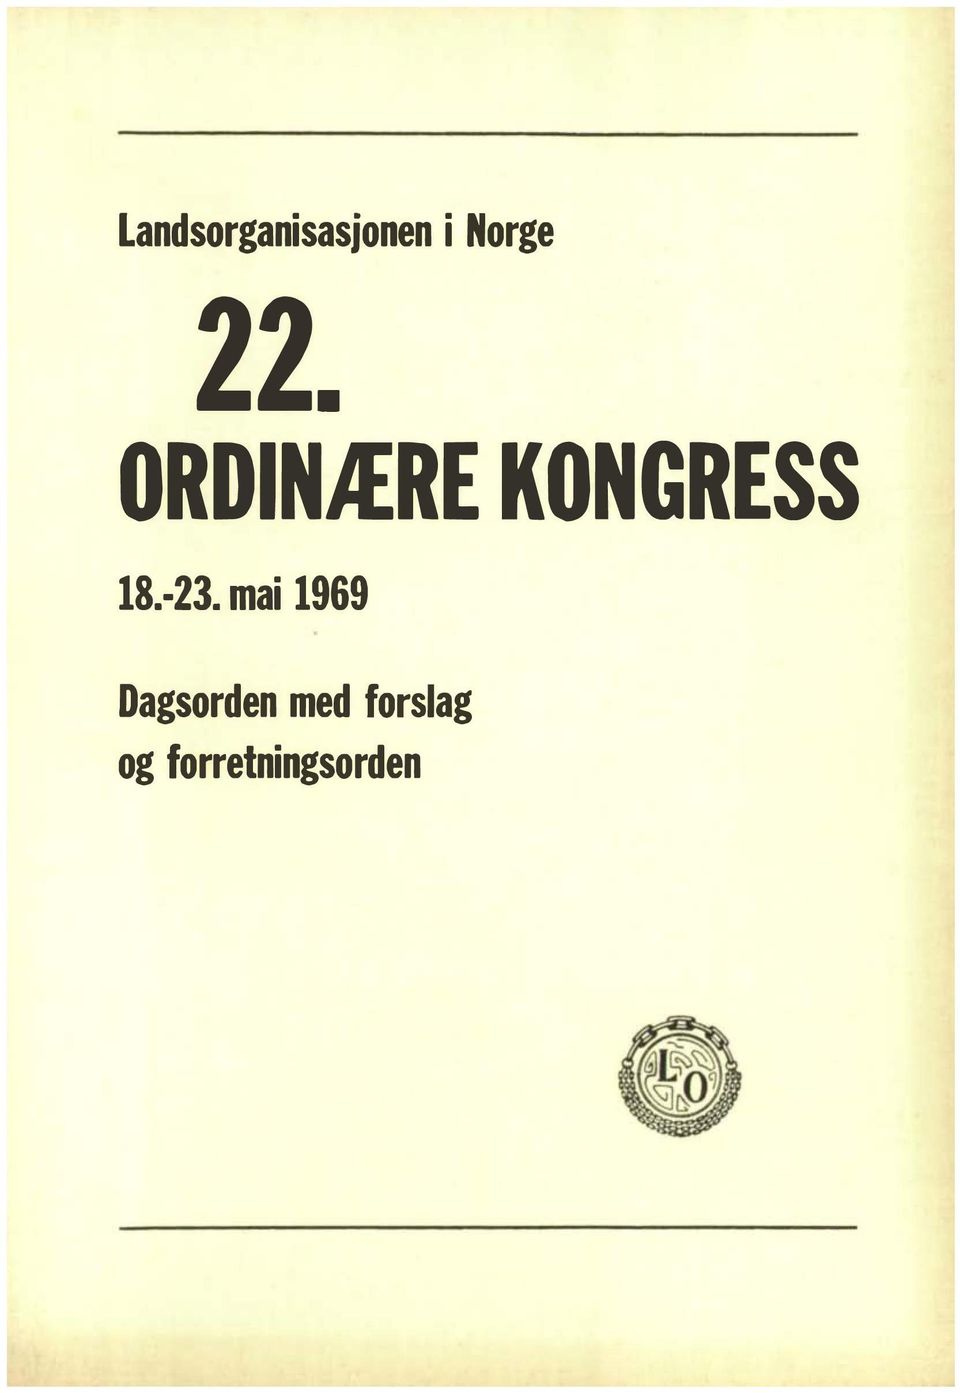 ORDINÆRE KONGRESS 18.-23.